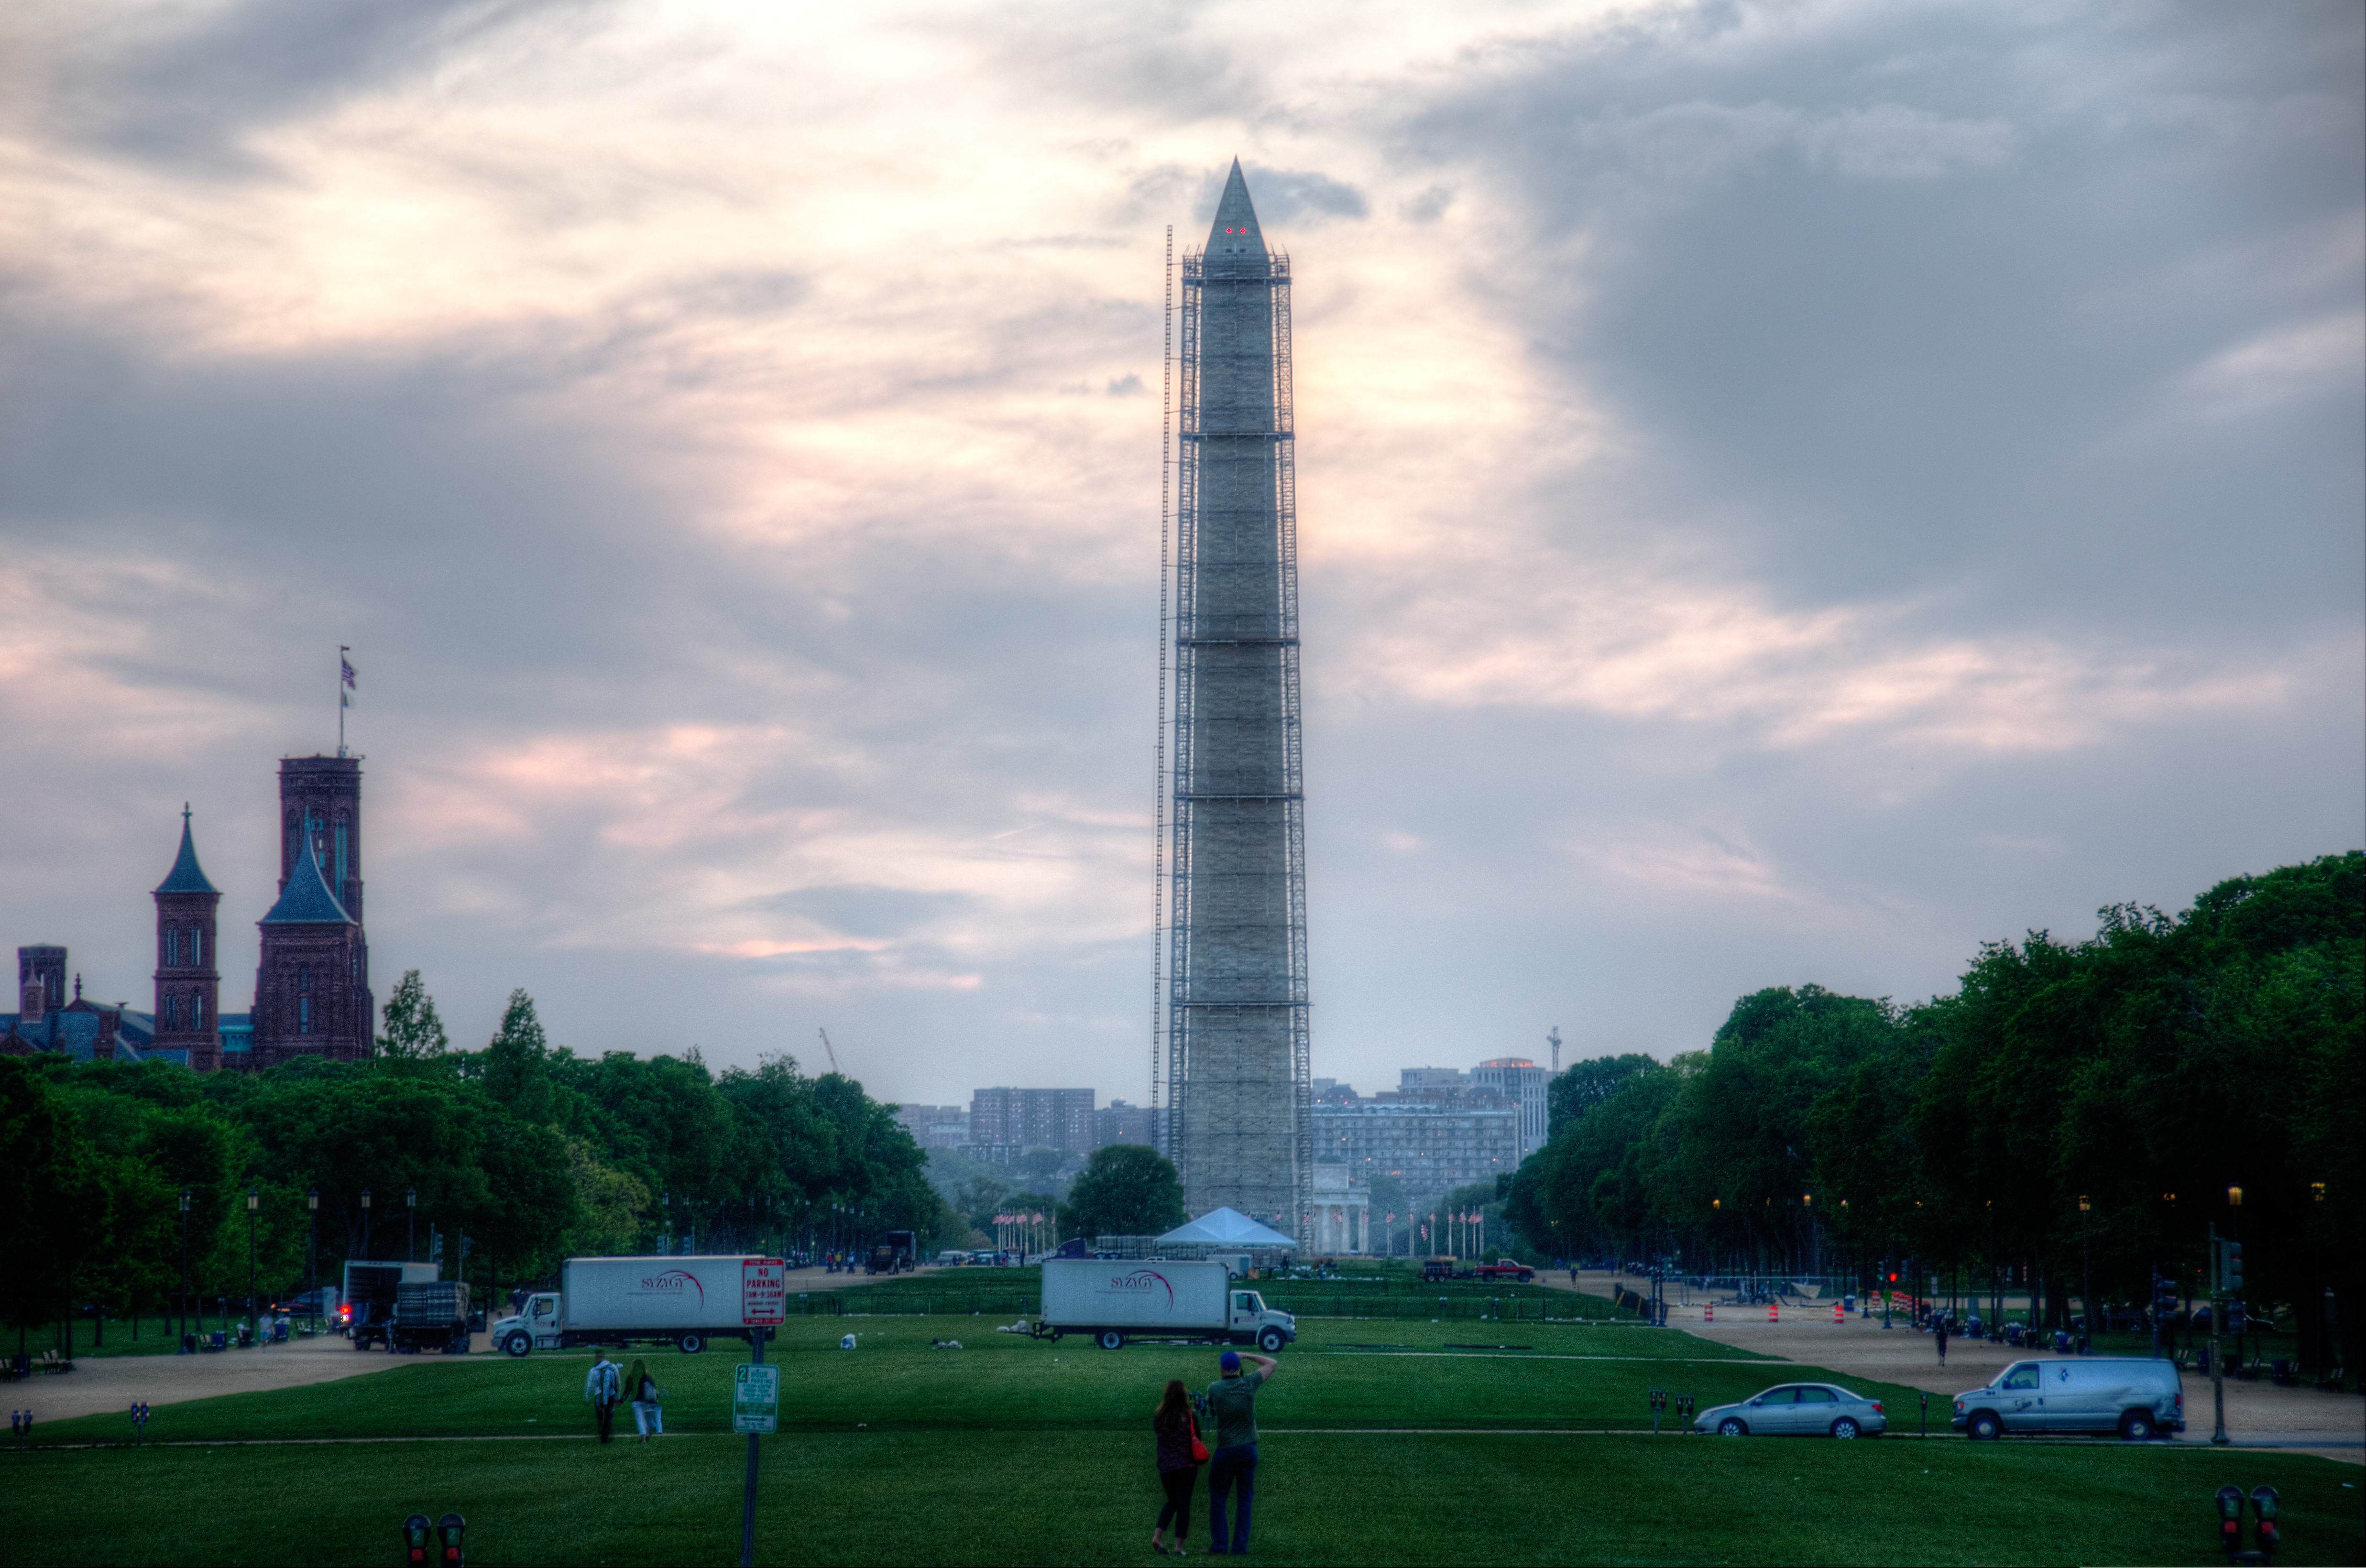 George Washington Memorial